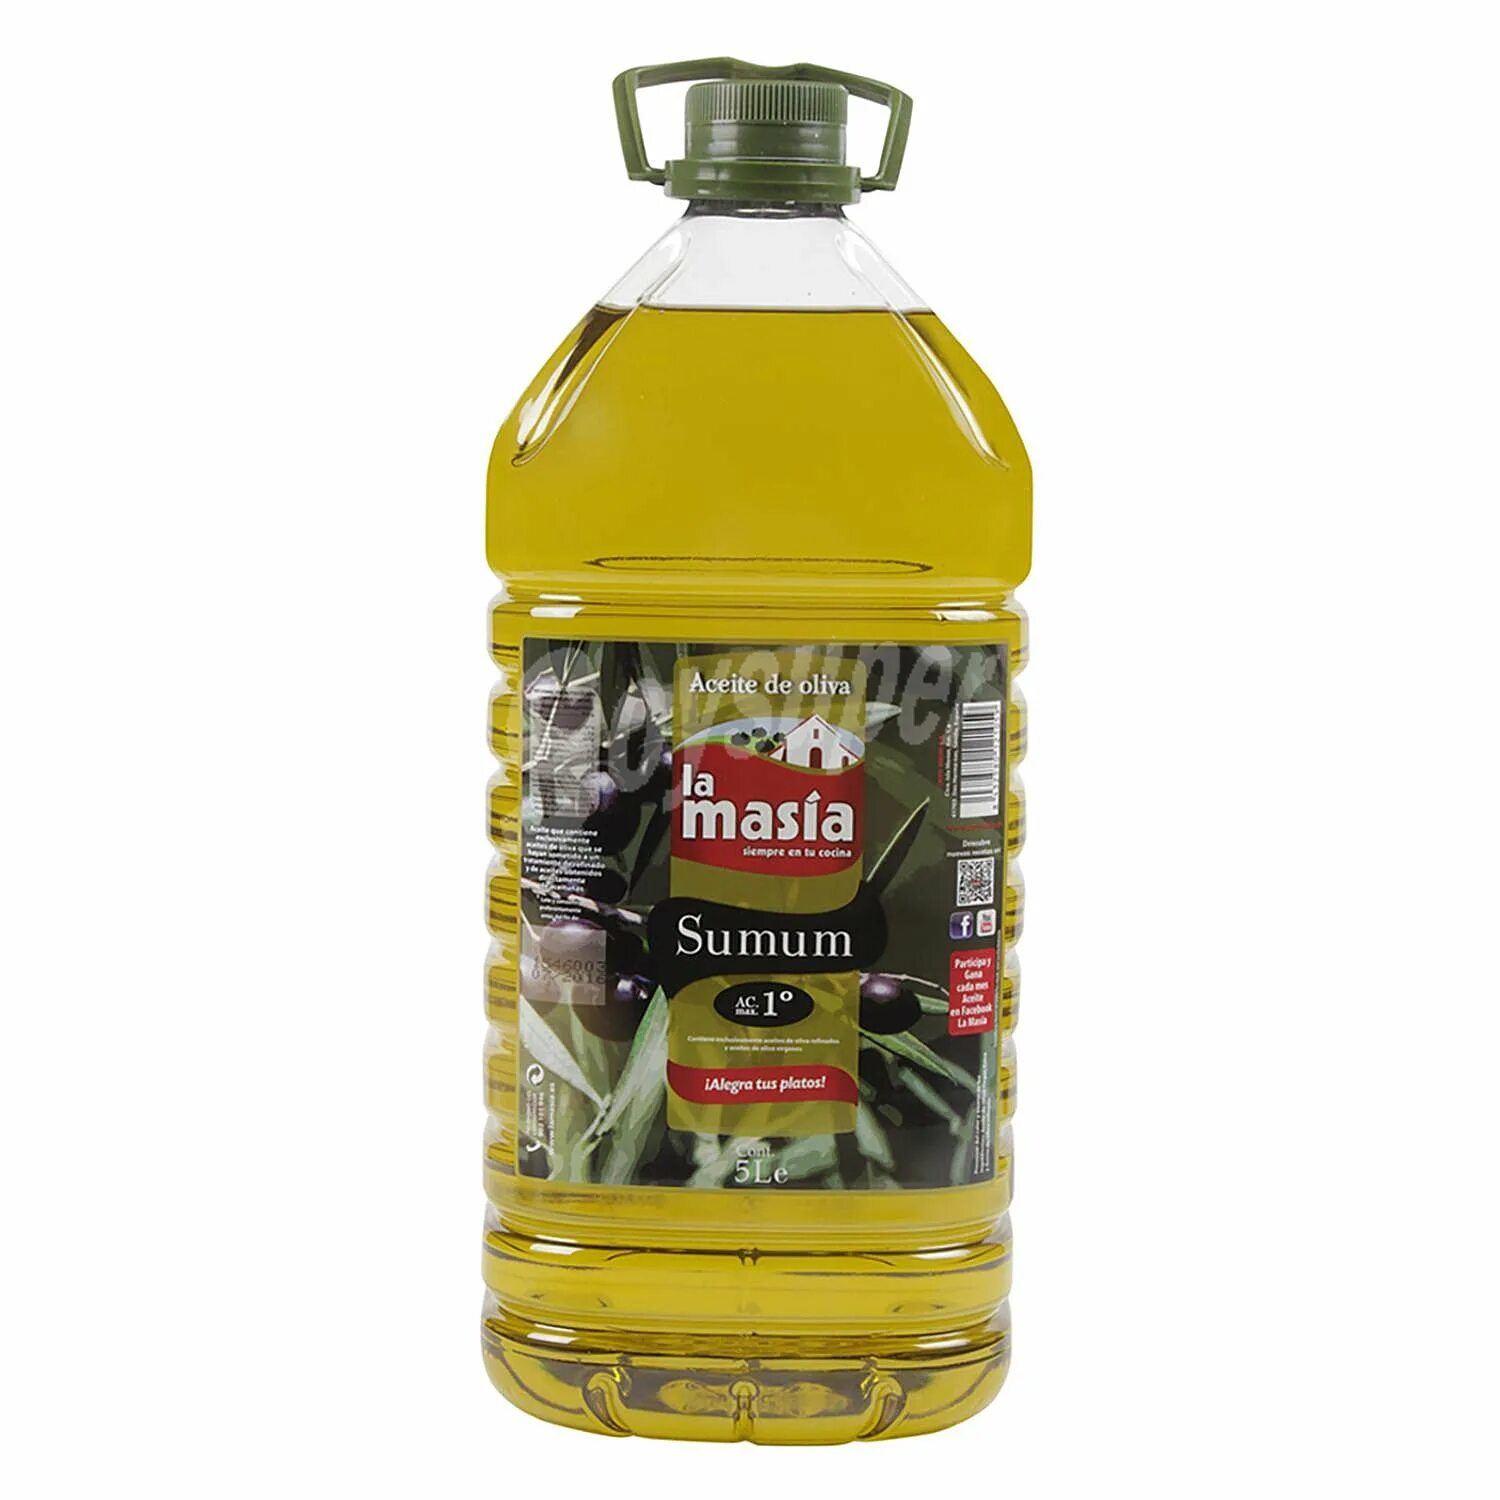 La Masia оливковое масло. Испанское оливковое масло Extra Virgin. Оливковое масло Испания. Испанское оливковое масло